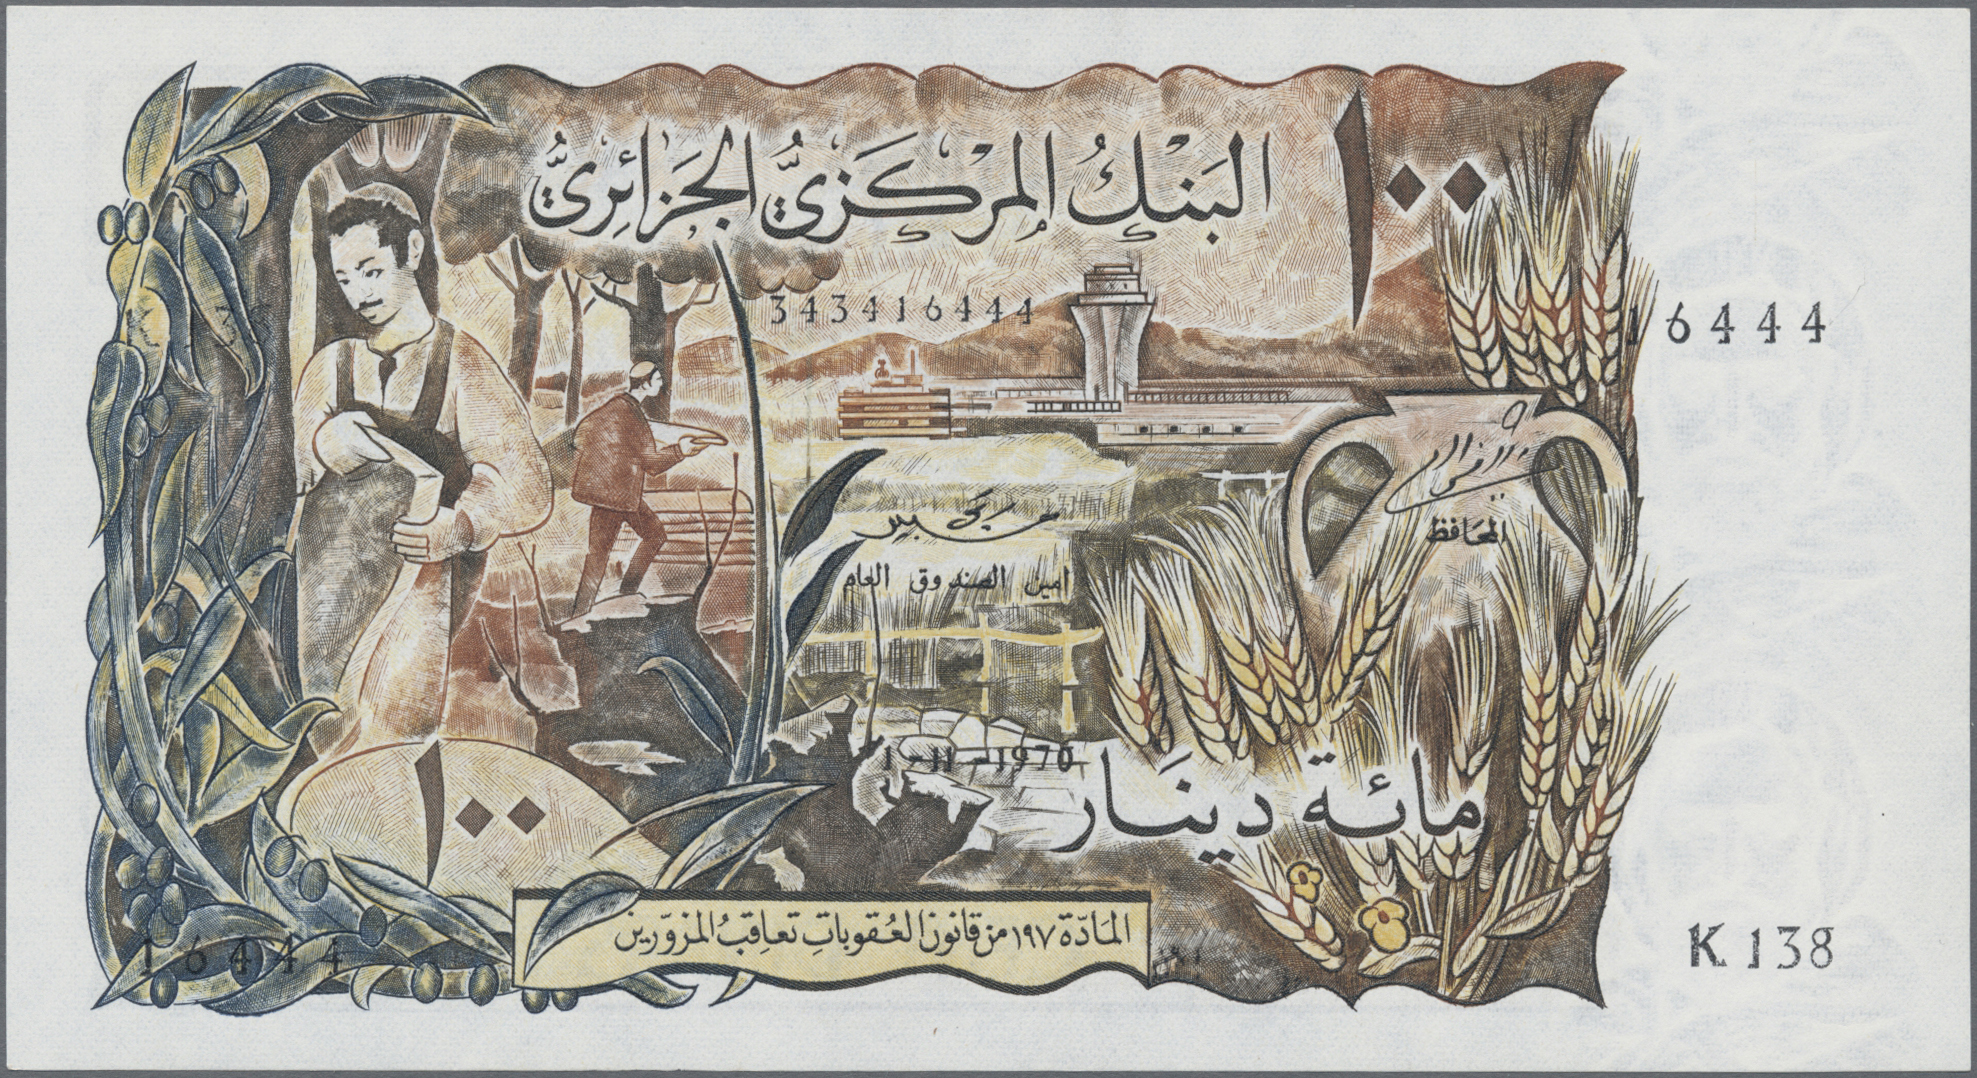 Lot 00028 - Algeria / Algerien | Banknoten  -  Auktionshaus Christoph Gärtner GmbH & Co. KG 55th AUCTION - Day 1